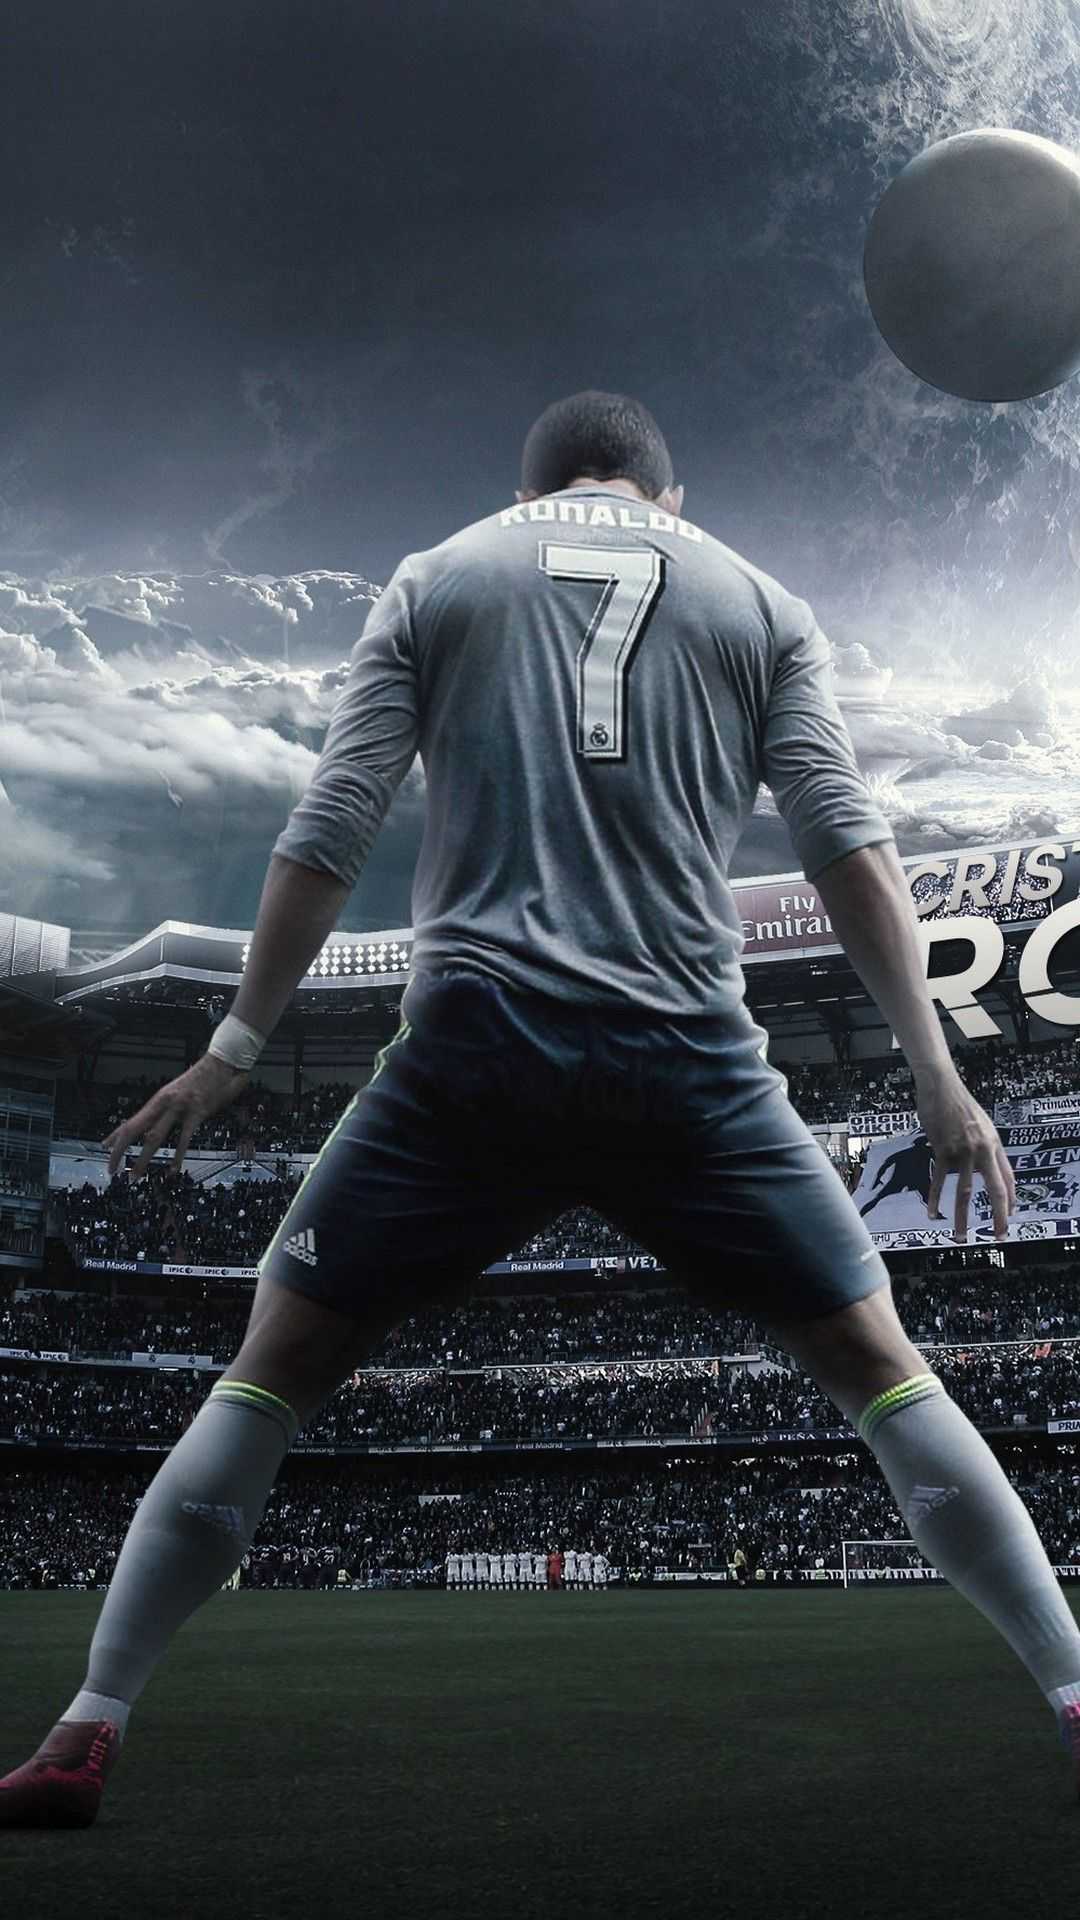 Ronaldo Wallpaper - NawPic